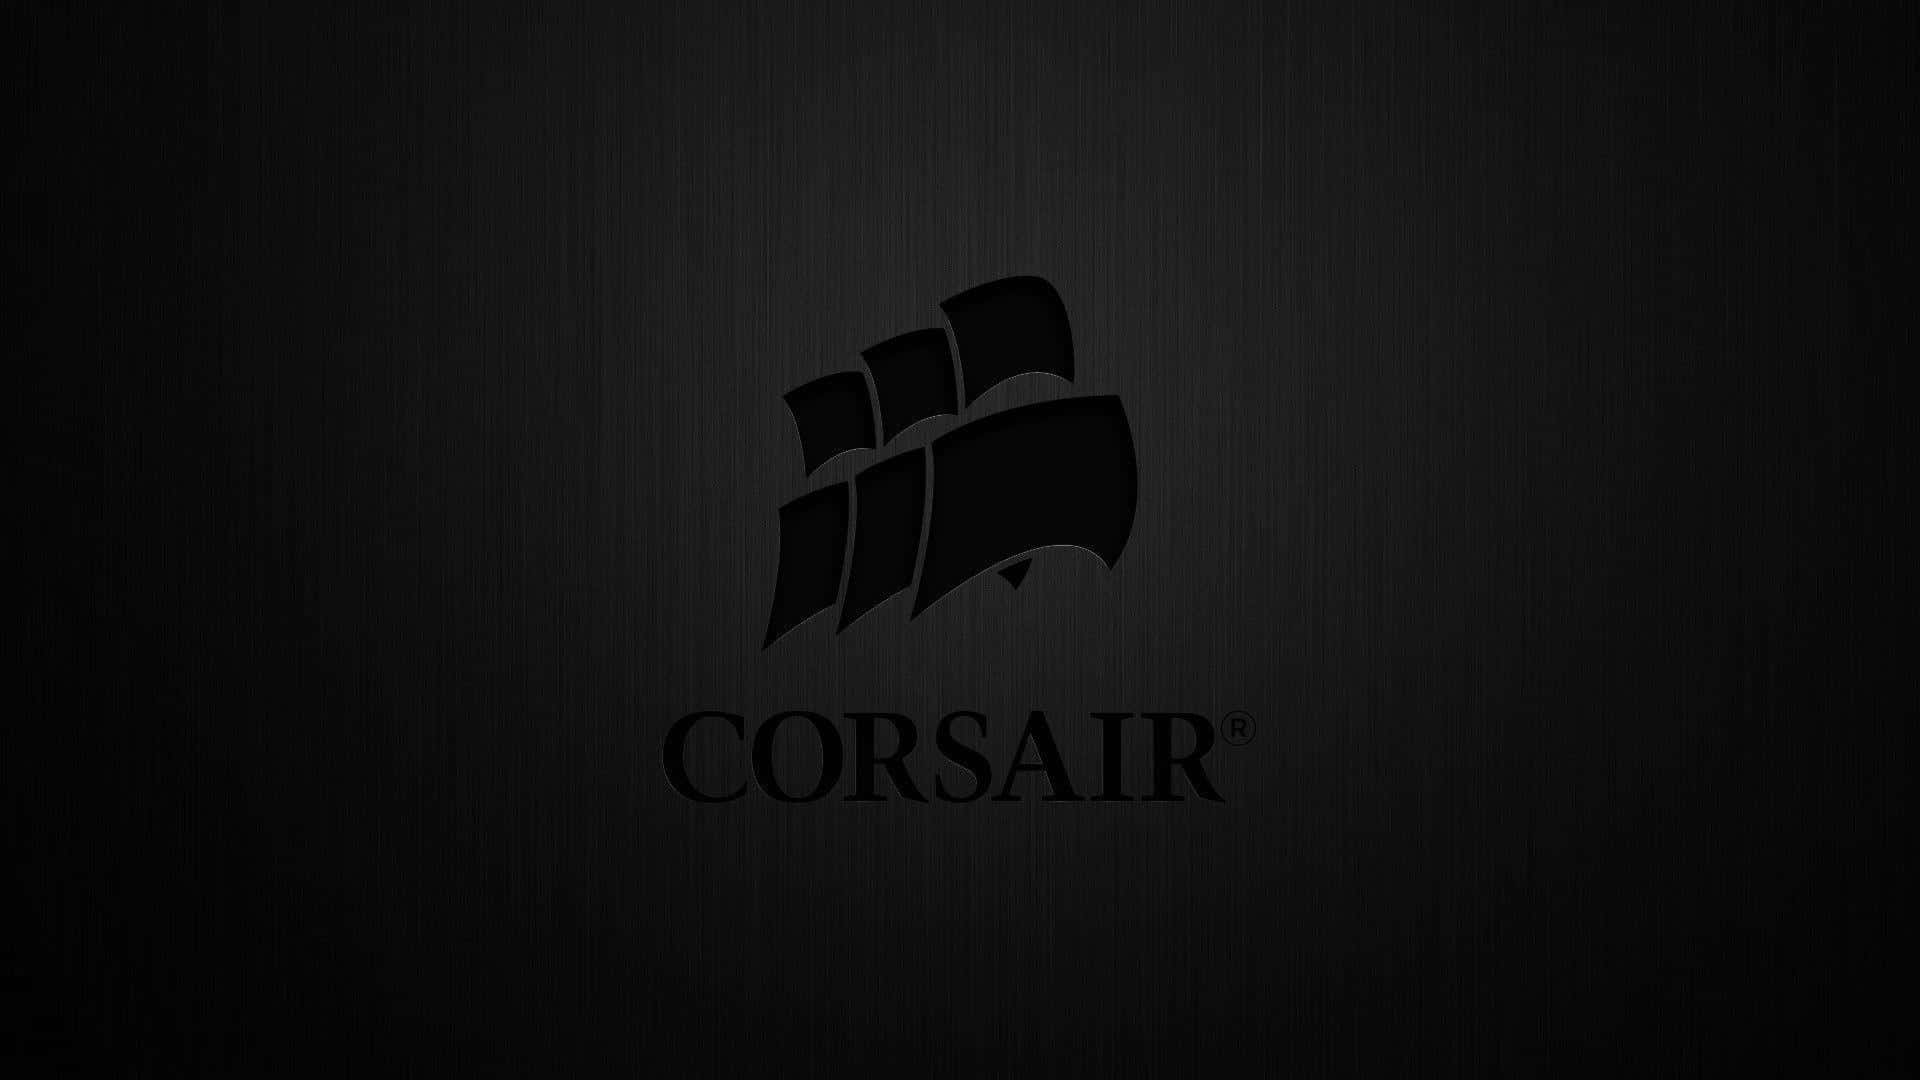 Corsair Logo On A Black Background